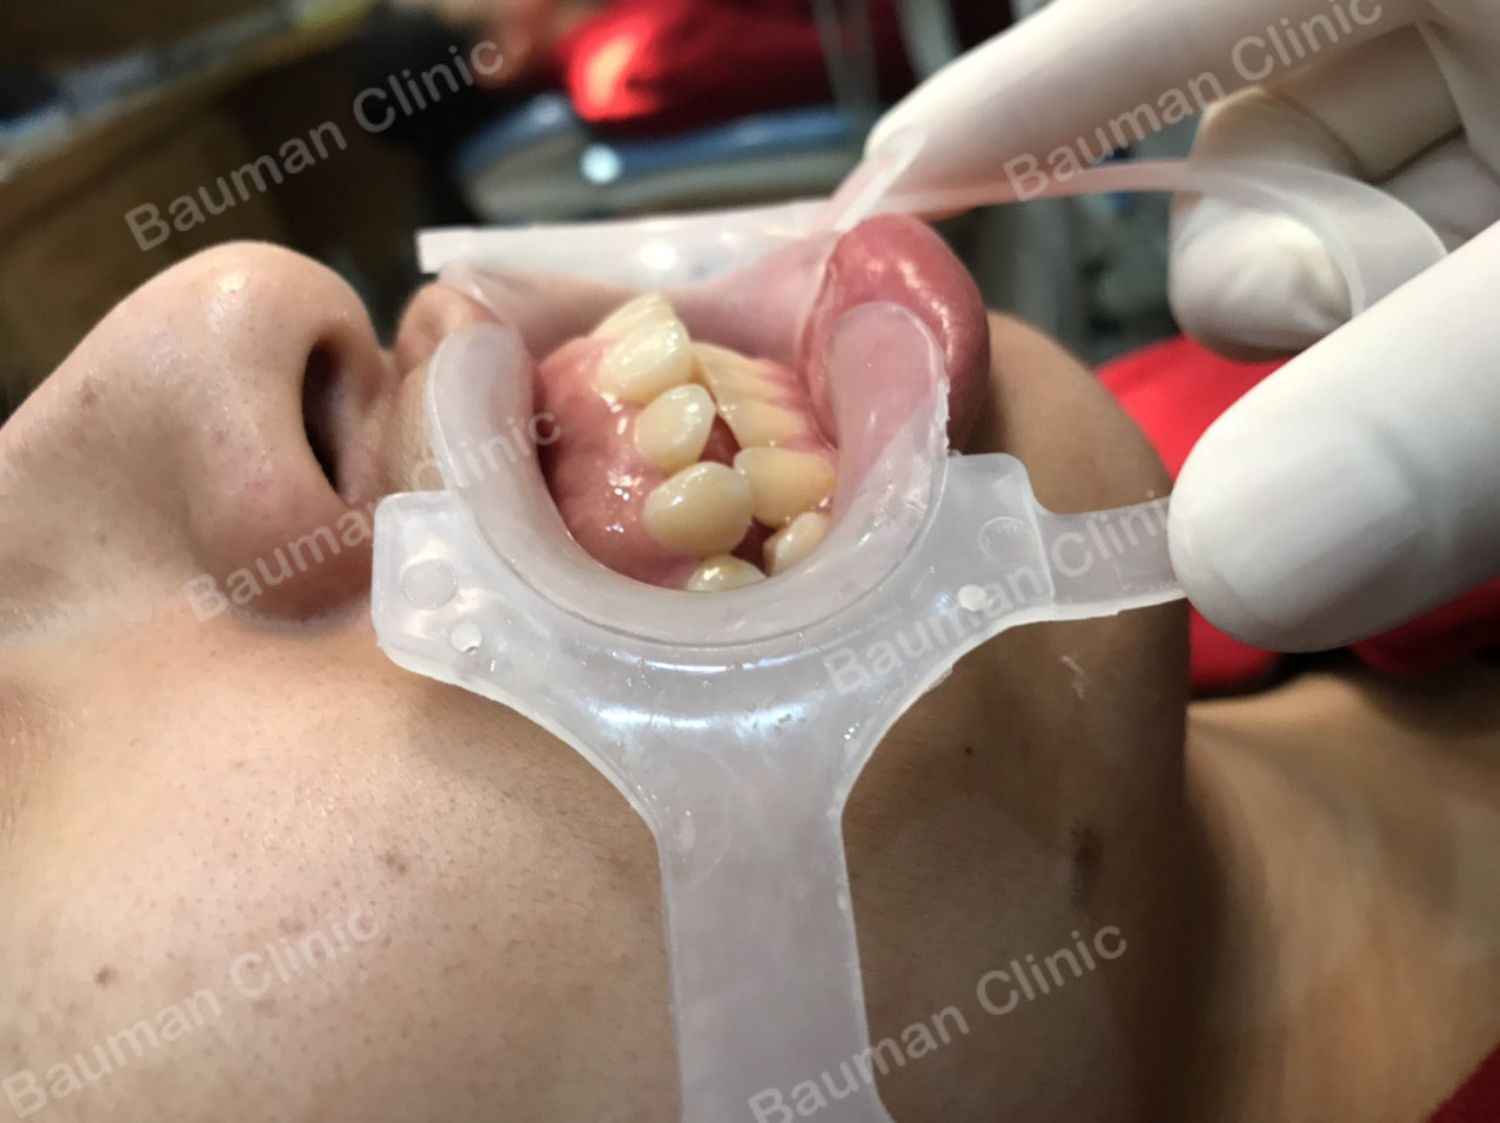 Ca niềng răng số 5093 - Nha khoa Bauman Clinic